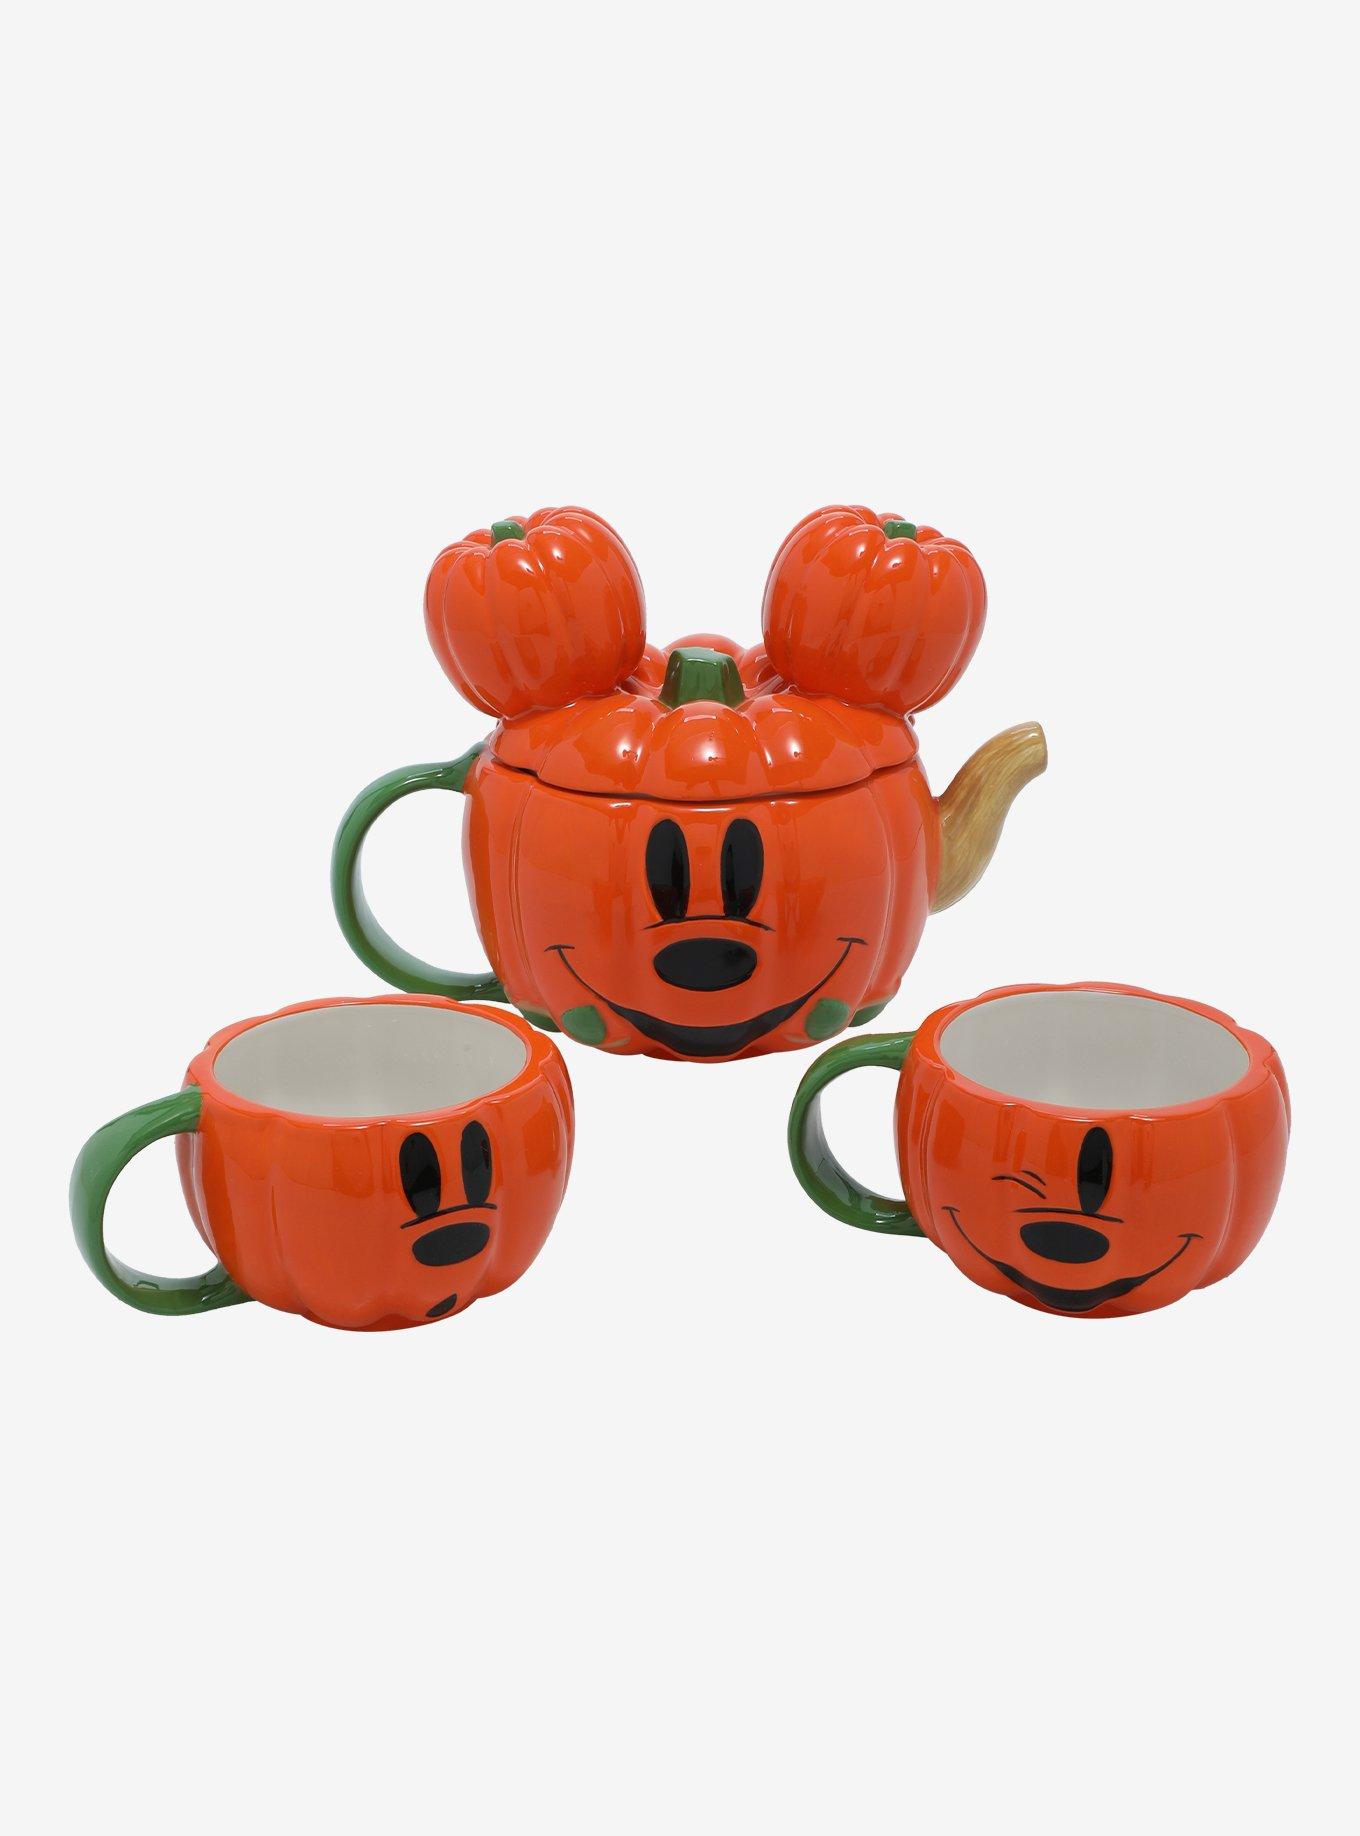 Disney Cups /Vintage Disney Classic Mugs Collection / Mickey Mouse Mug /  Walt Disney Productions / Mickey Pinocchio Snow White Alice